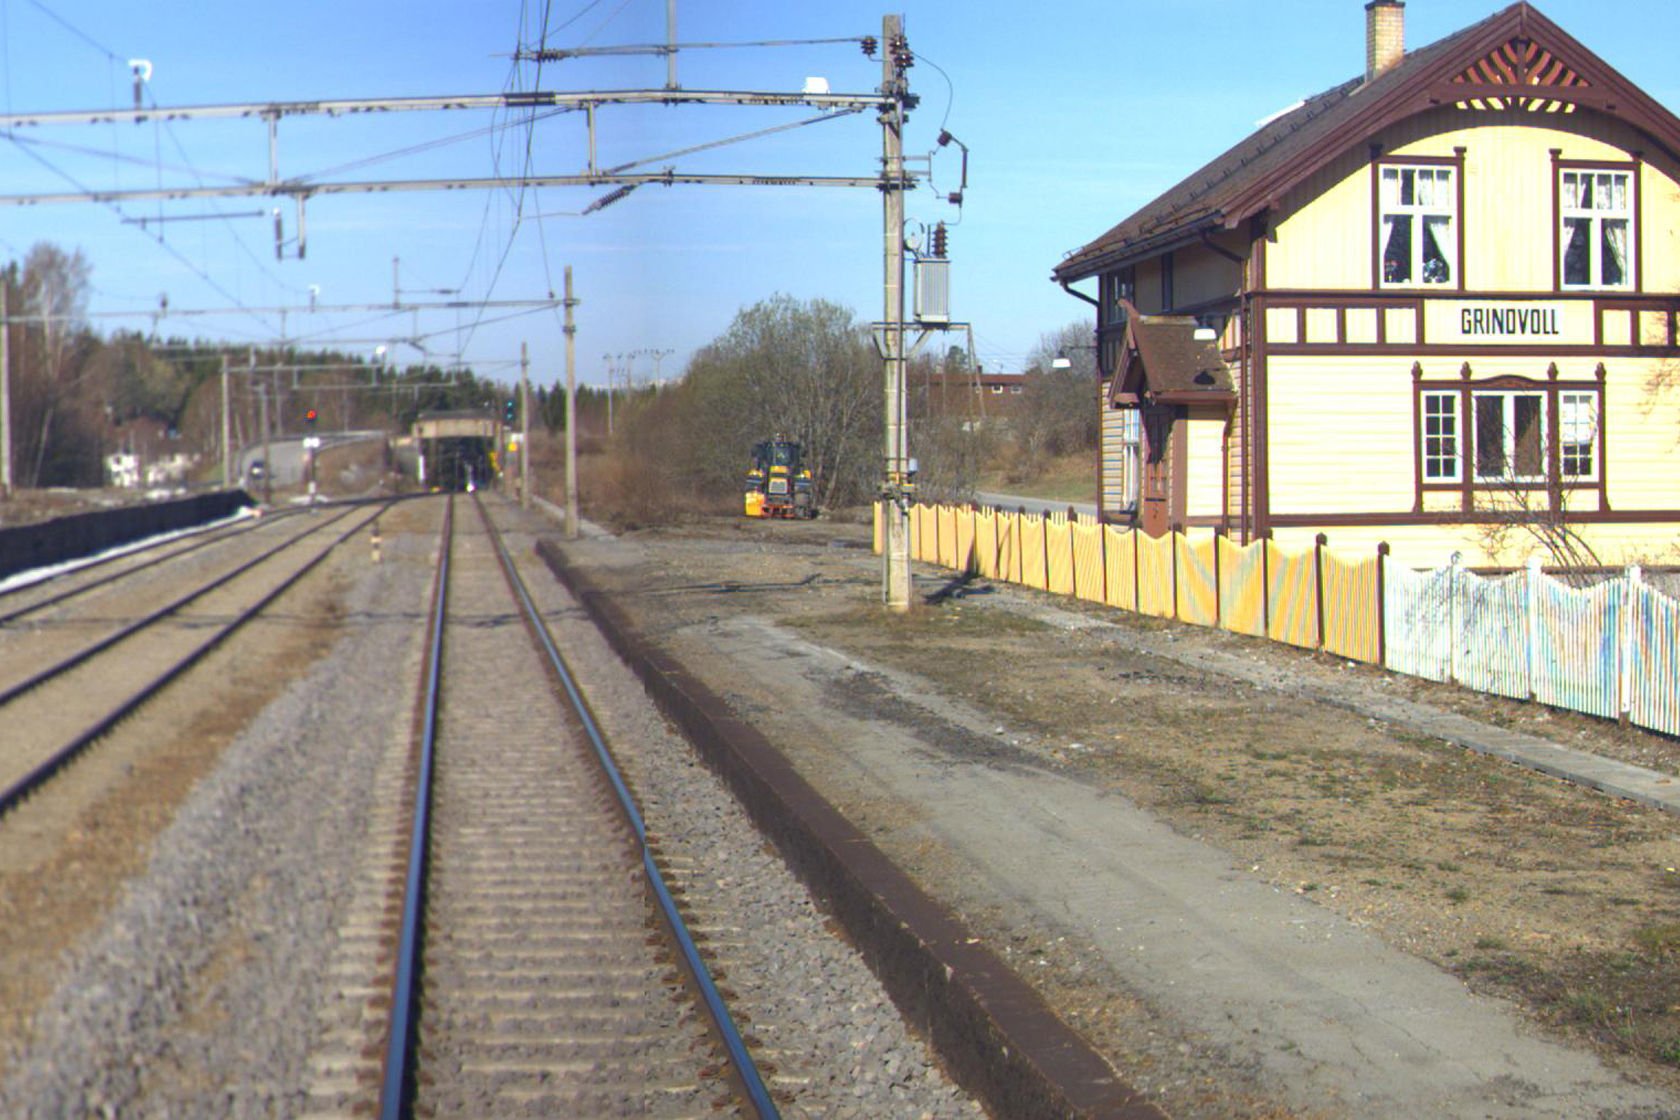 Tracks and station building at Grindvoll station